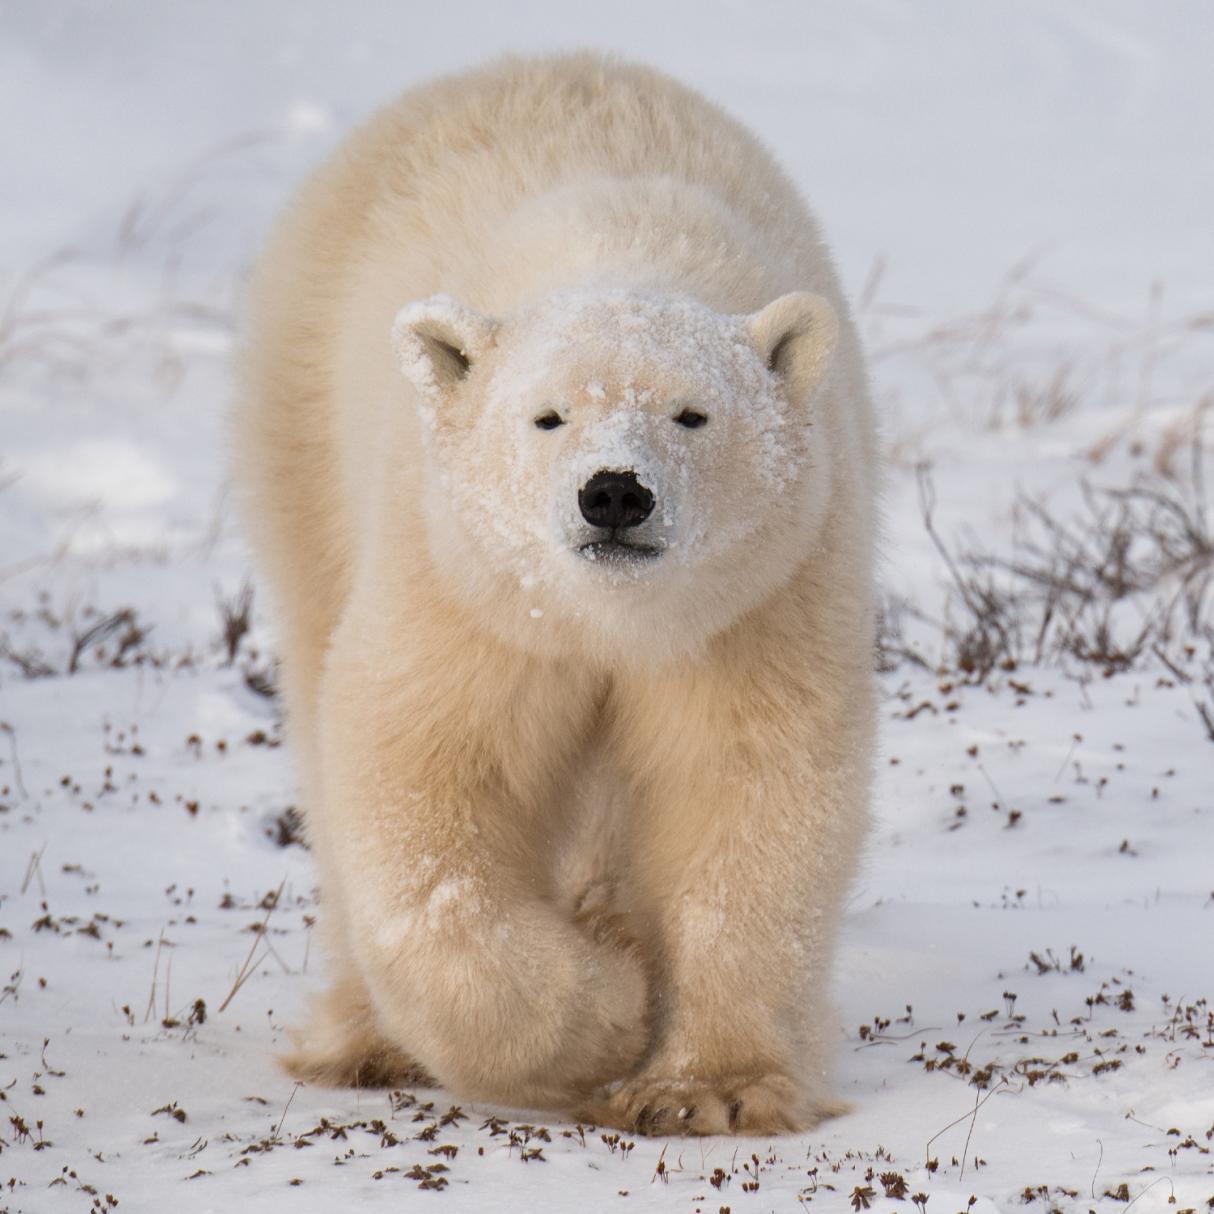 A white polar bear walks along the snow covered ground where brown shubbery pokes through. 